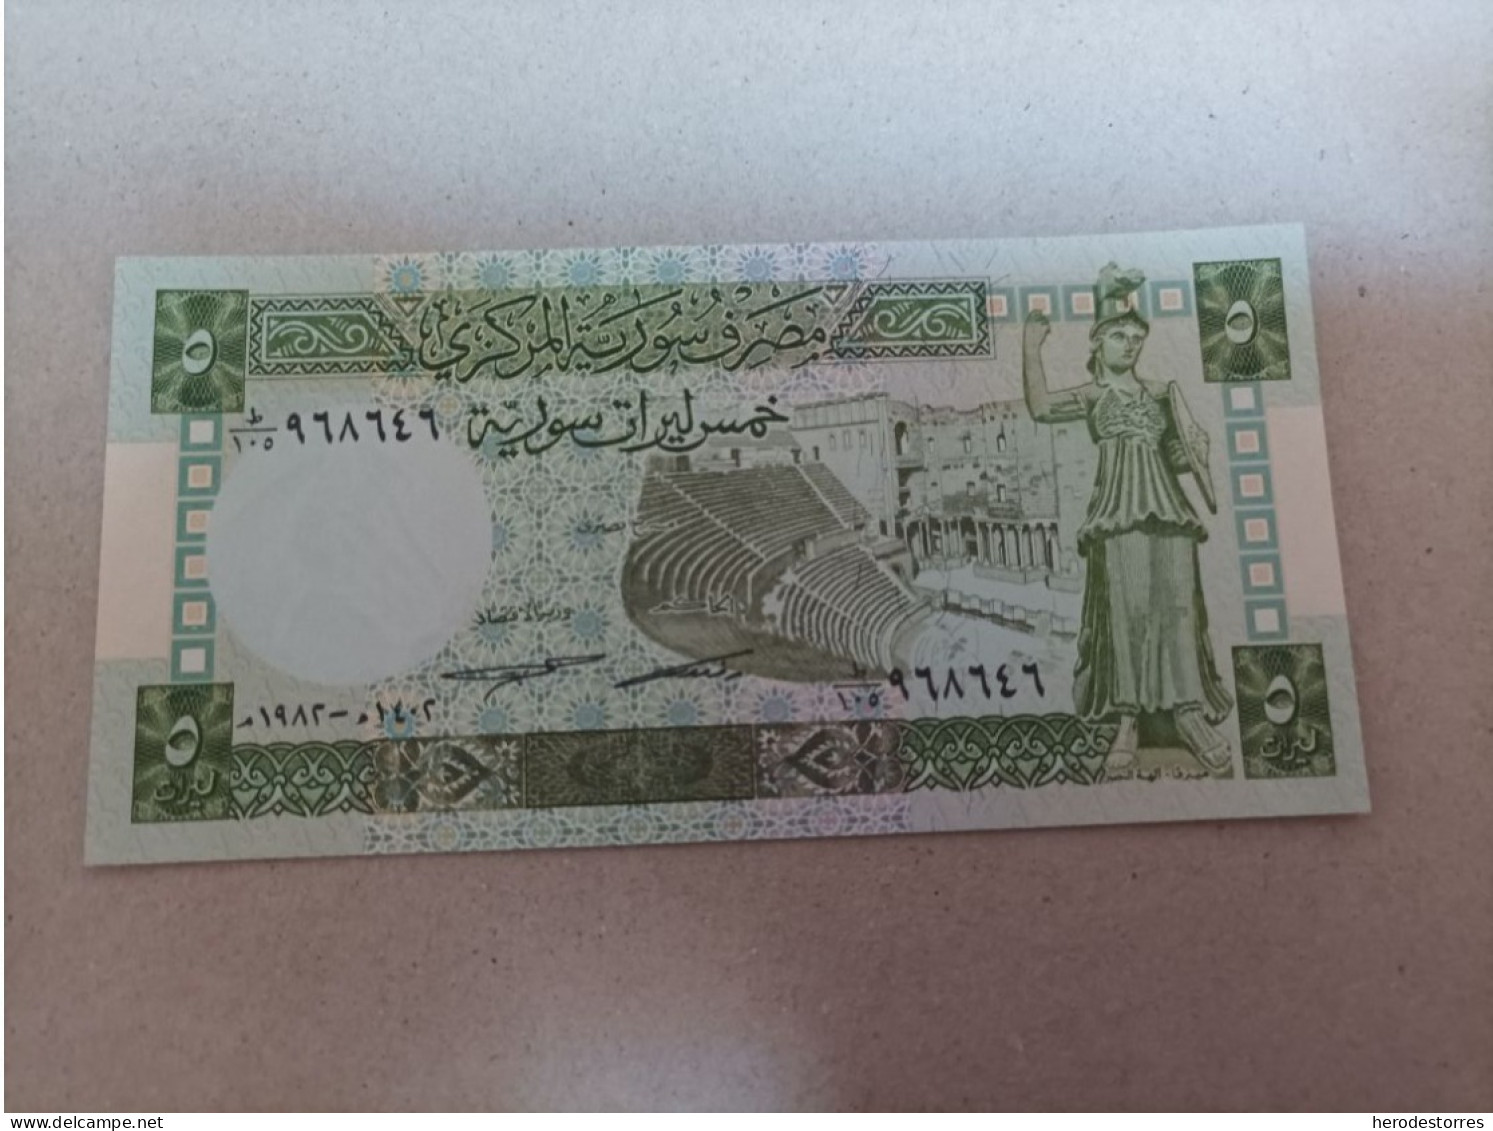 Billete Siria De 5 Syrian Pounds, Año 1982, UNC - Syrië